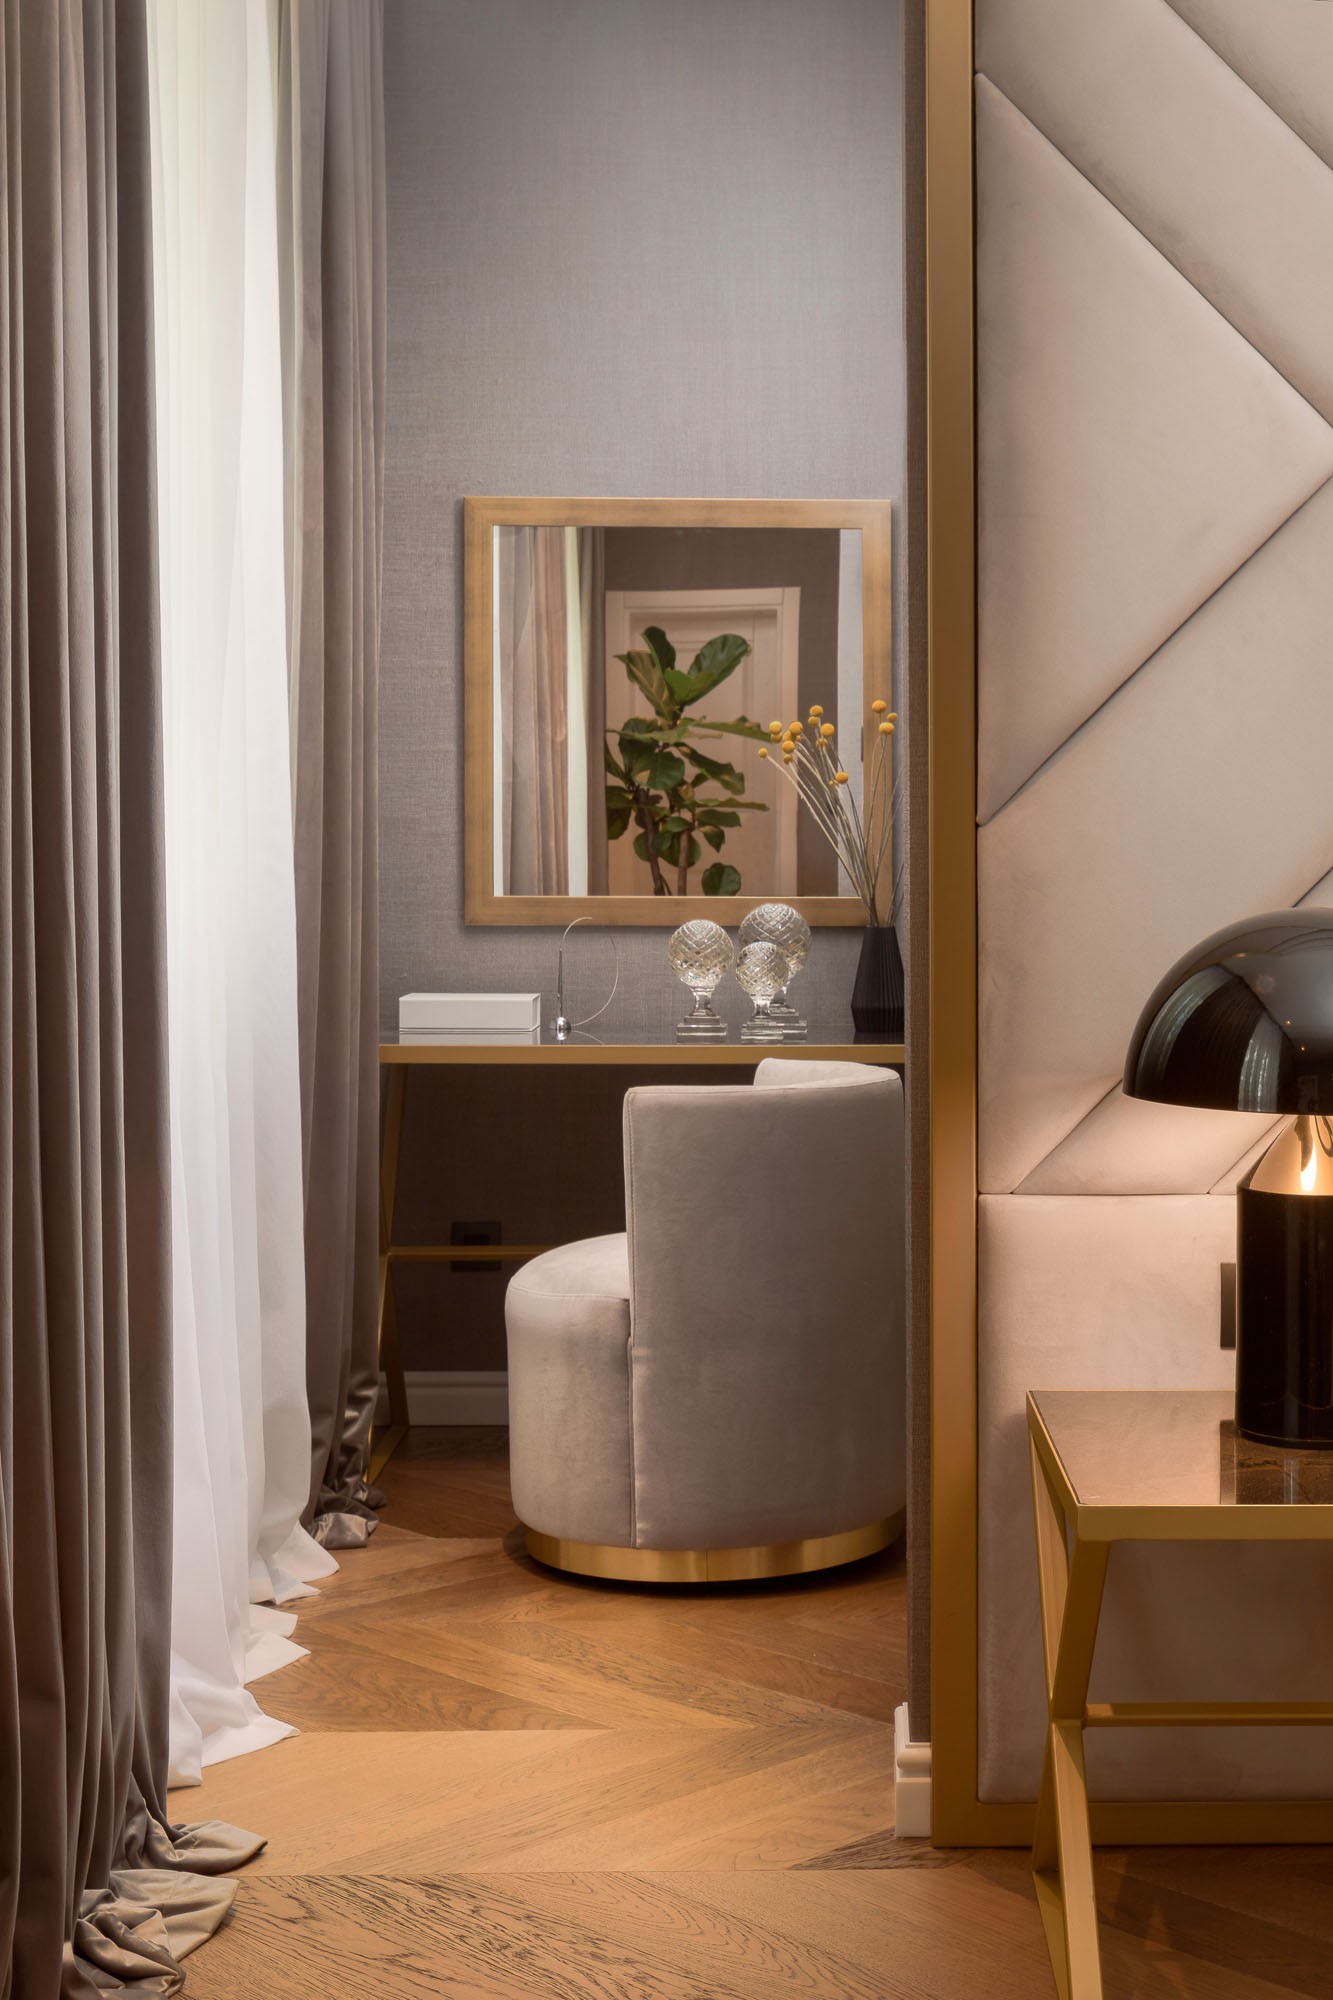 Five elements luxury rooms in Split